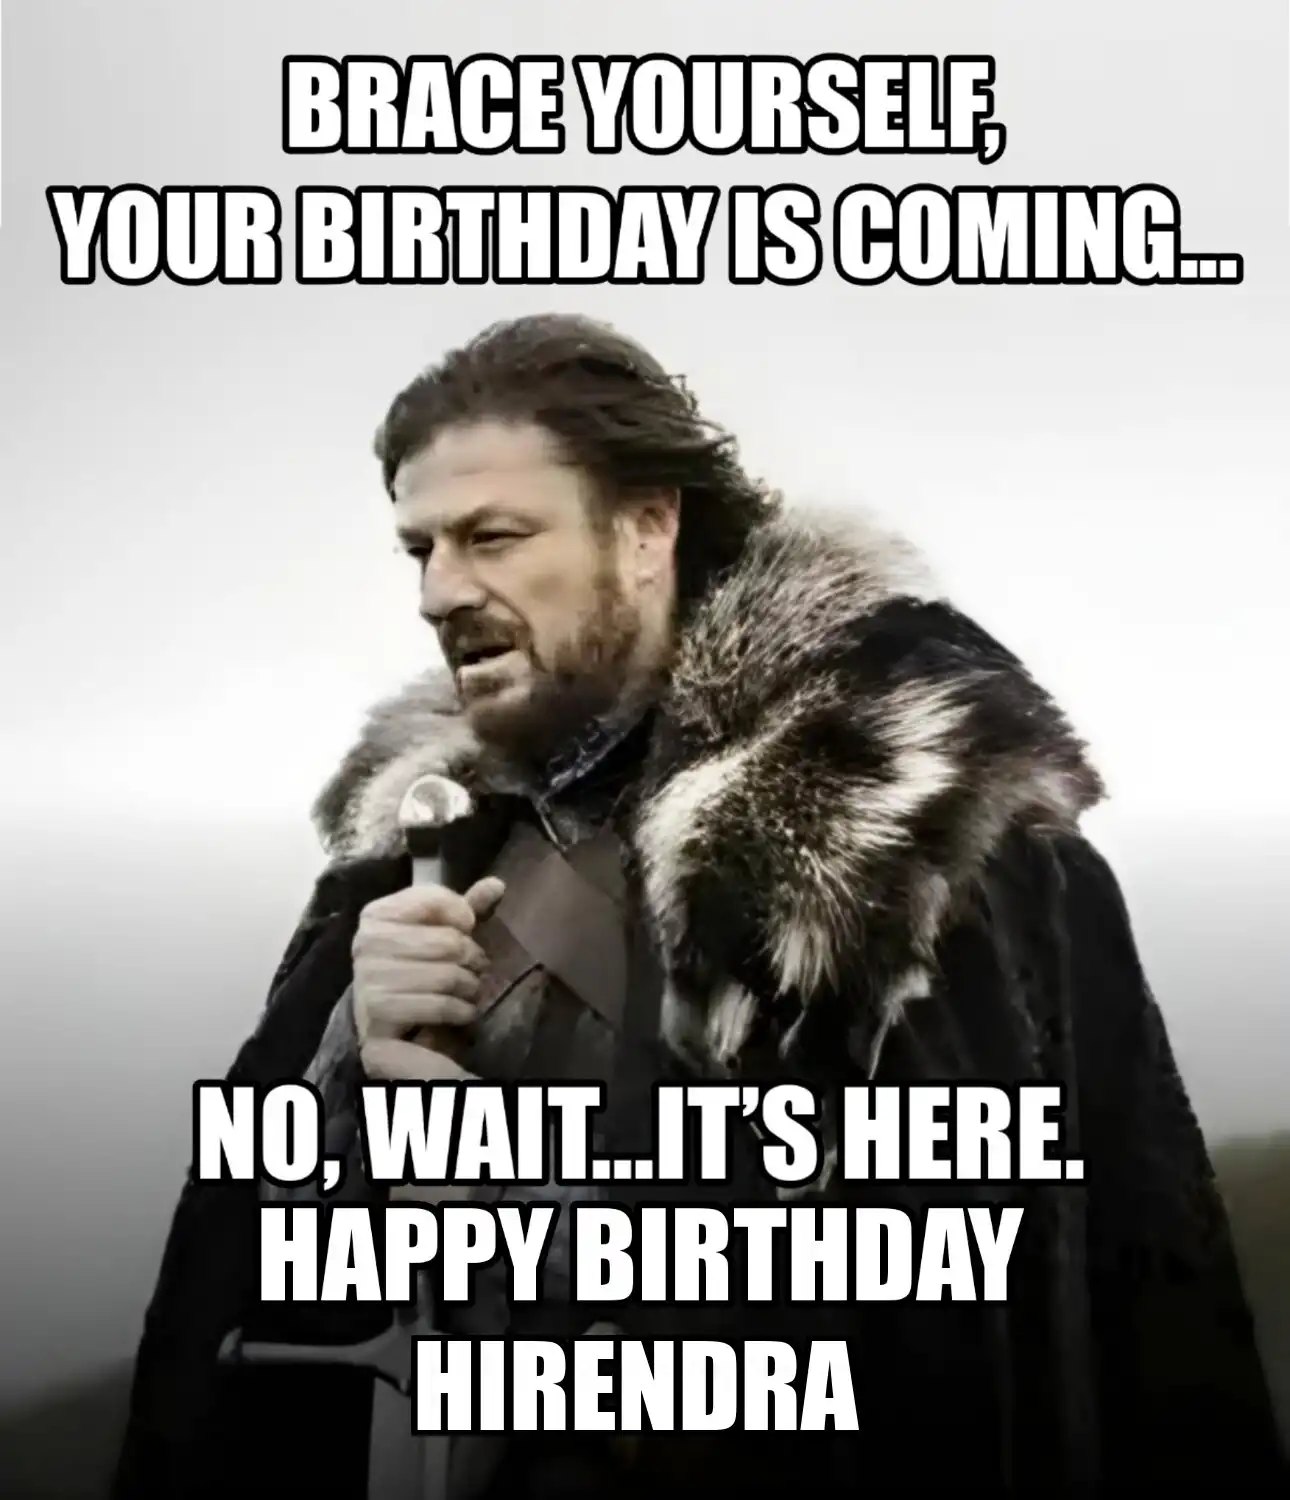 Happy Birthday Hirendra Brace Yourself Your Birthday Is Coming Meme